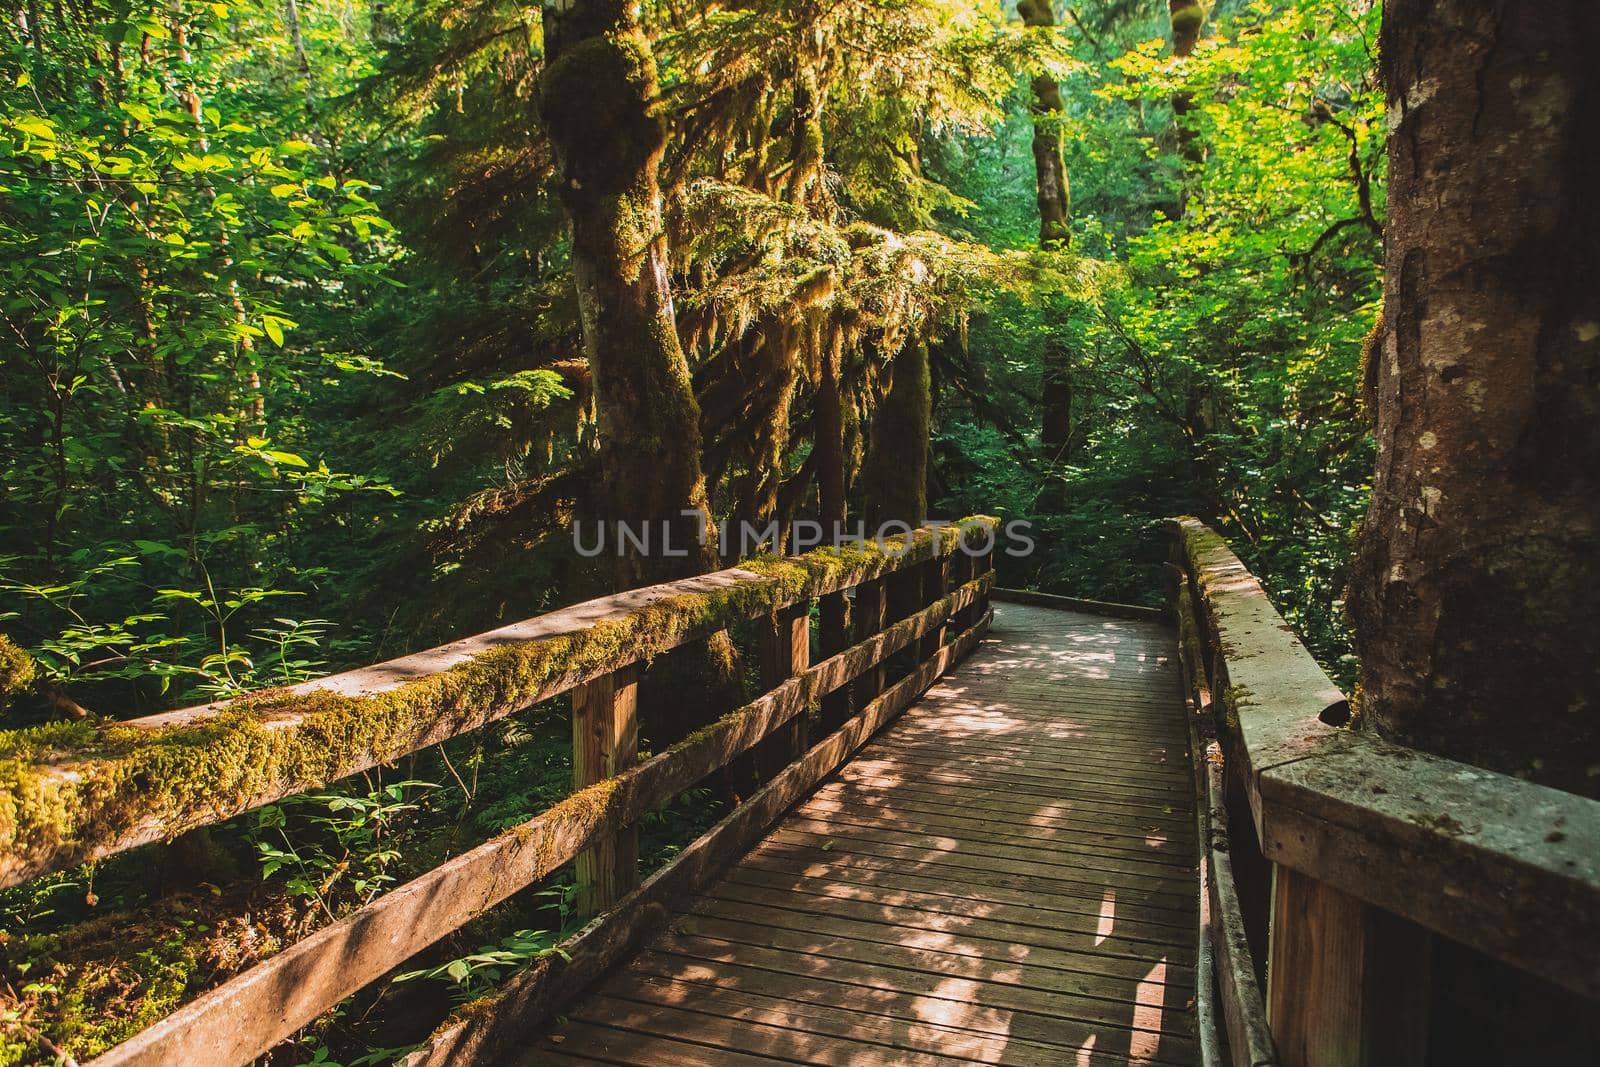 Path through the deep spooky forest. Wooden boardwalk trail through Wildwood Recreation area, Oregon, USA.